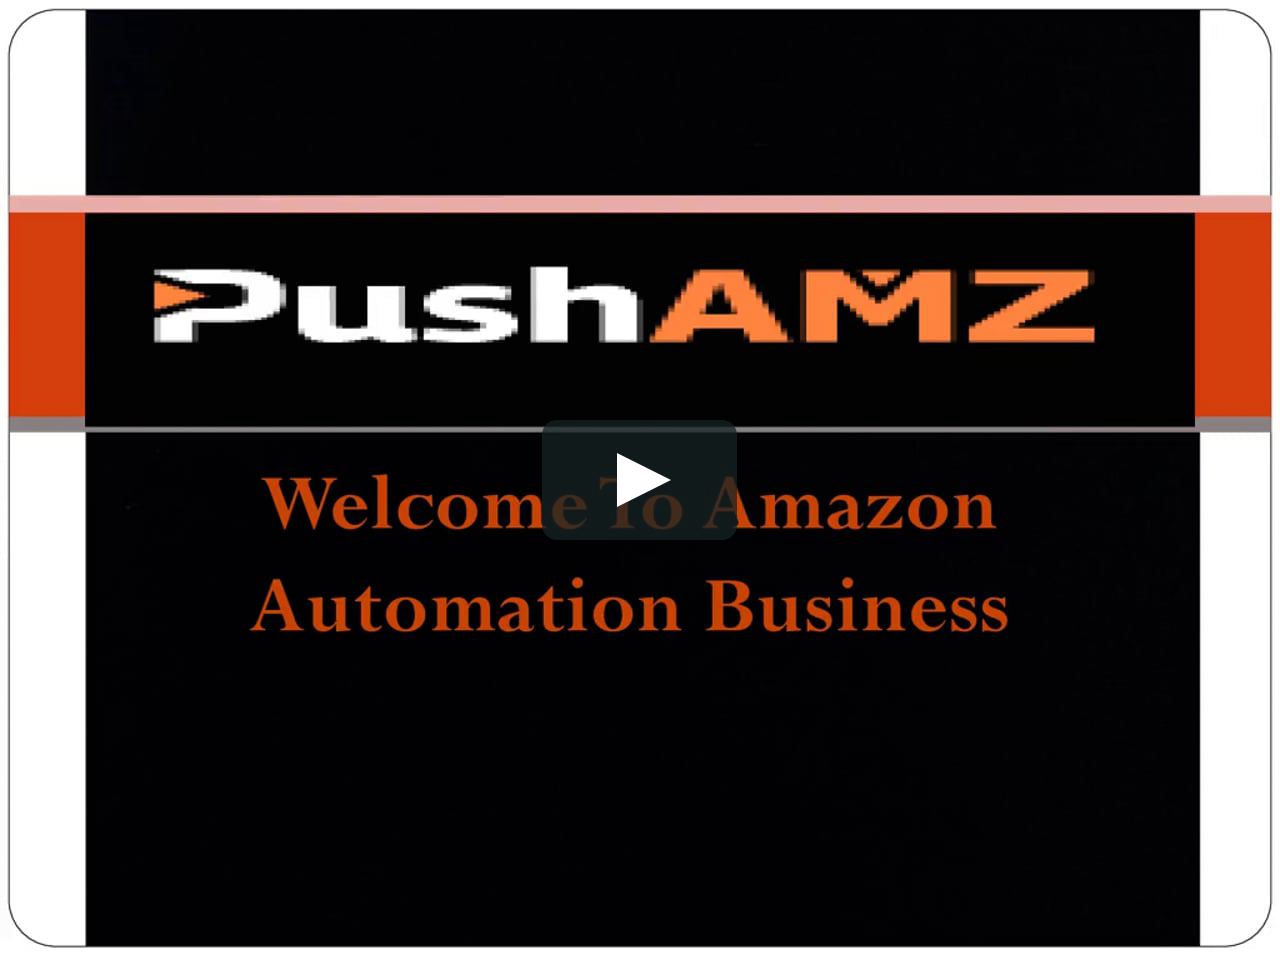 Welcome To Amazon Automation Business - Pushamz.mp4 on Vimeo